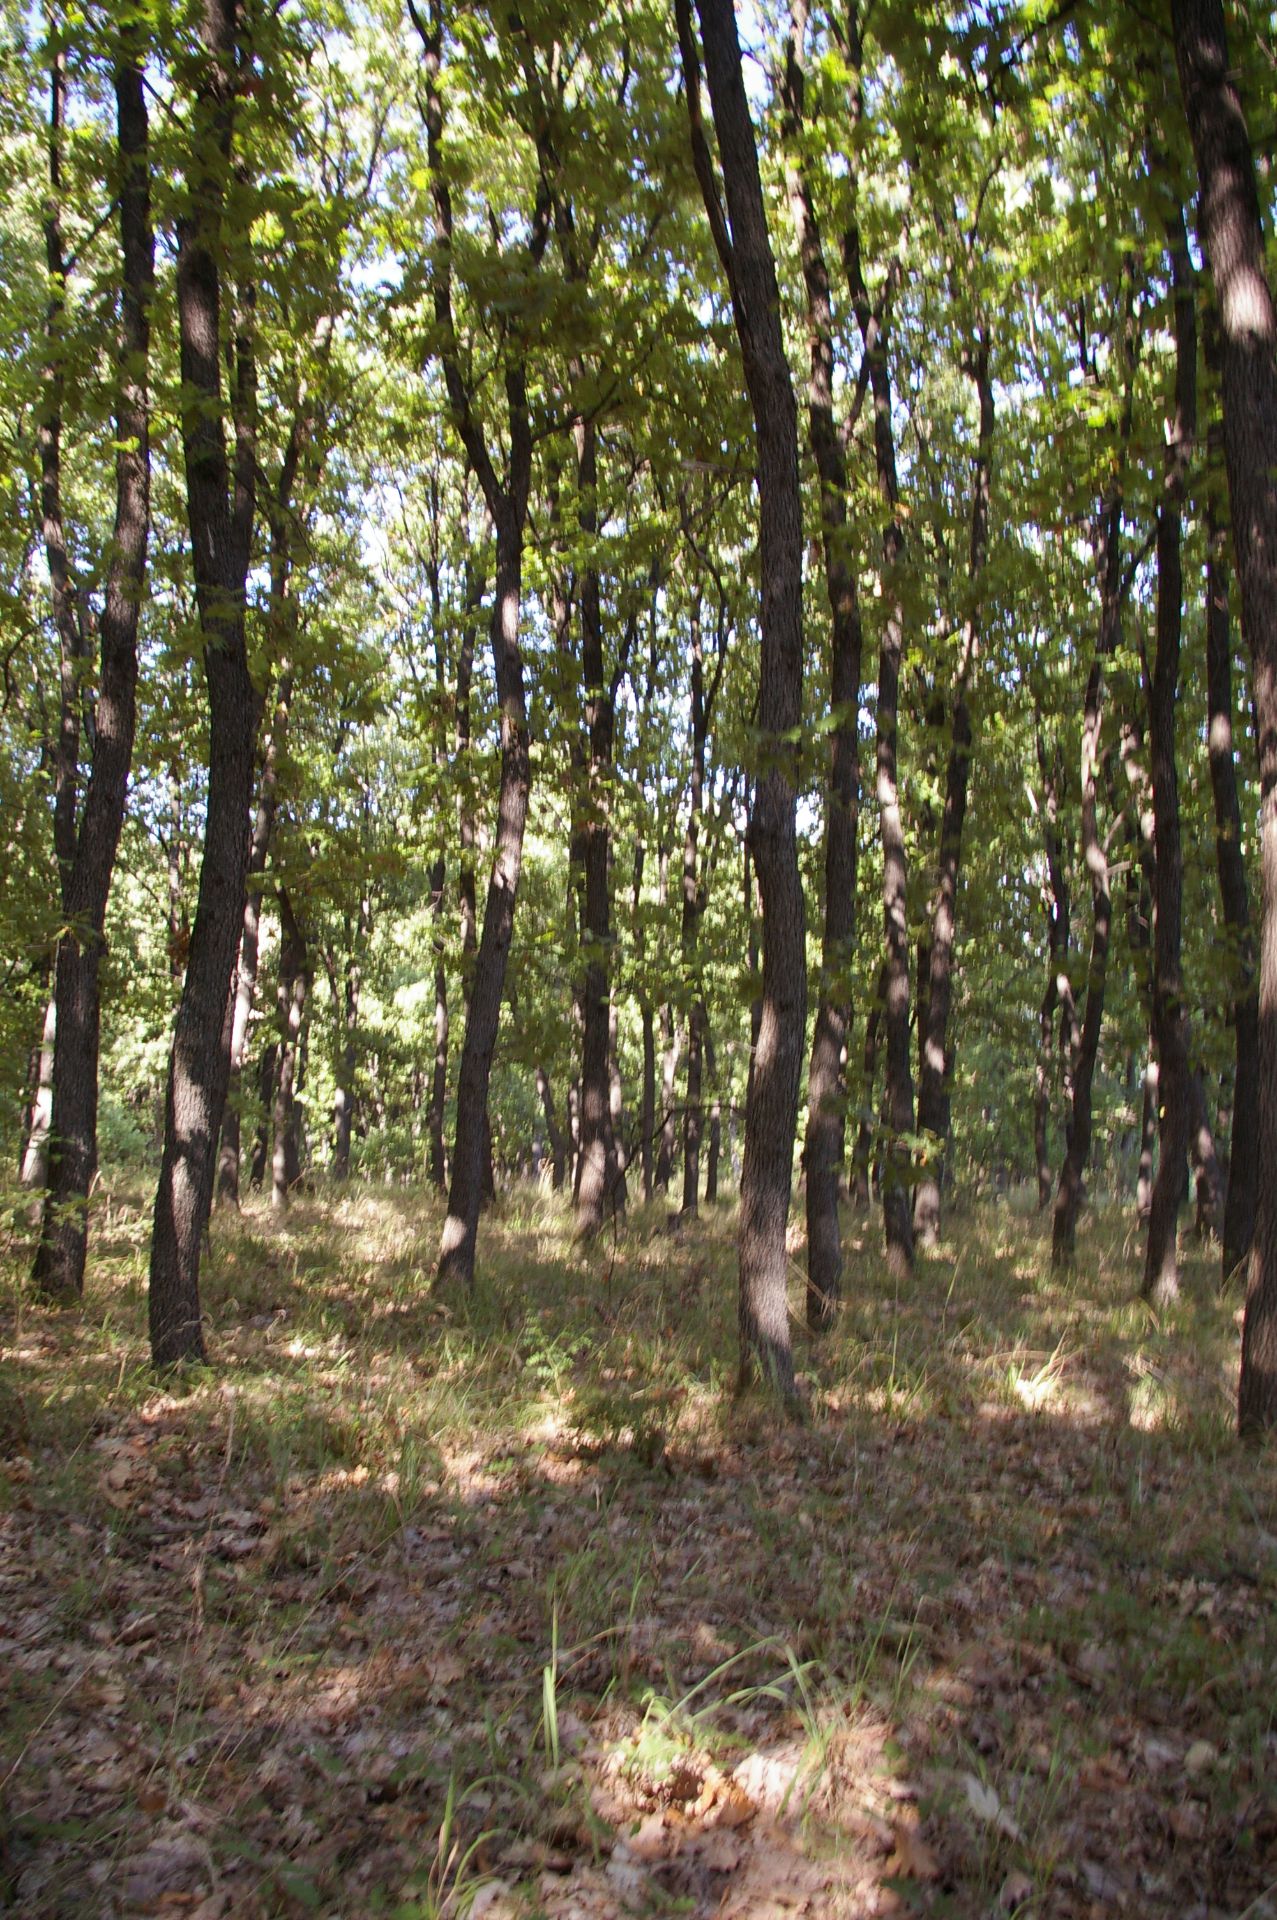 800 sqm Forest plot located in Vurtop, Vidin region, Bulgaria